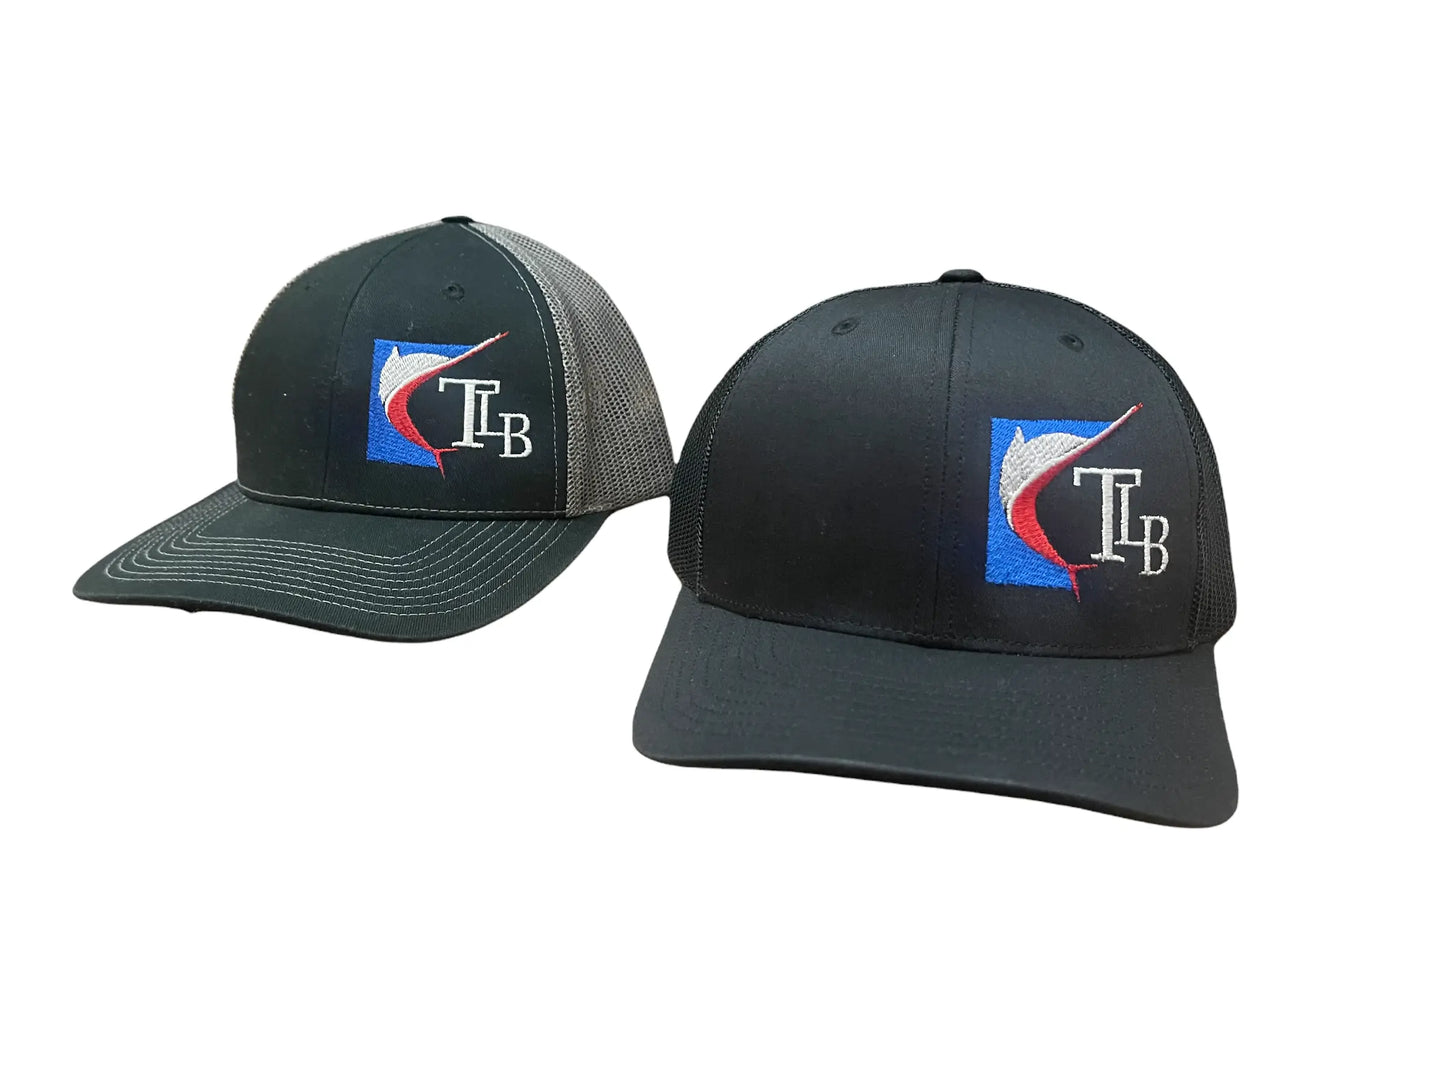 TLB Logo hats